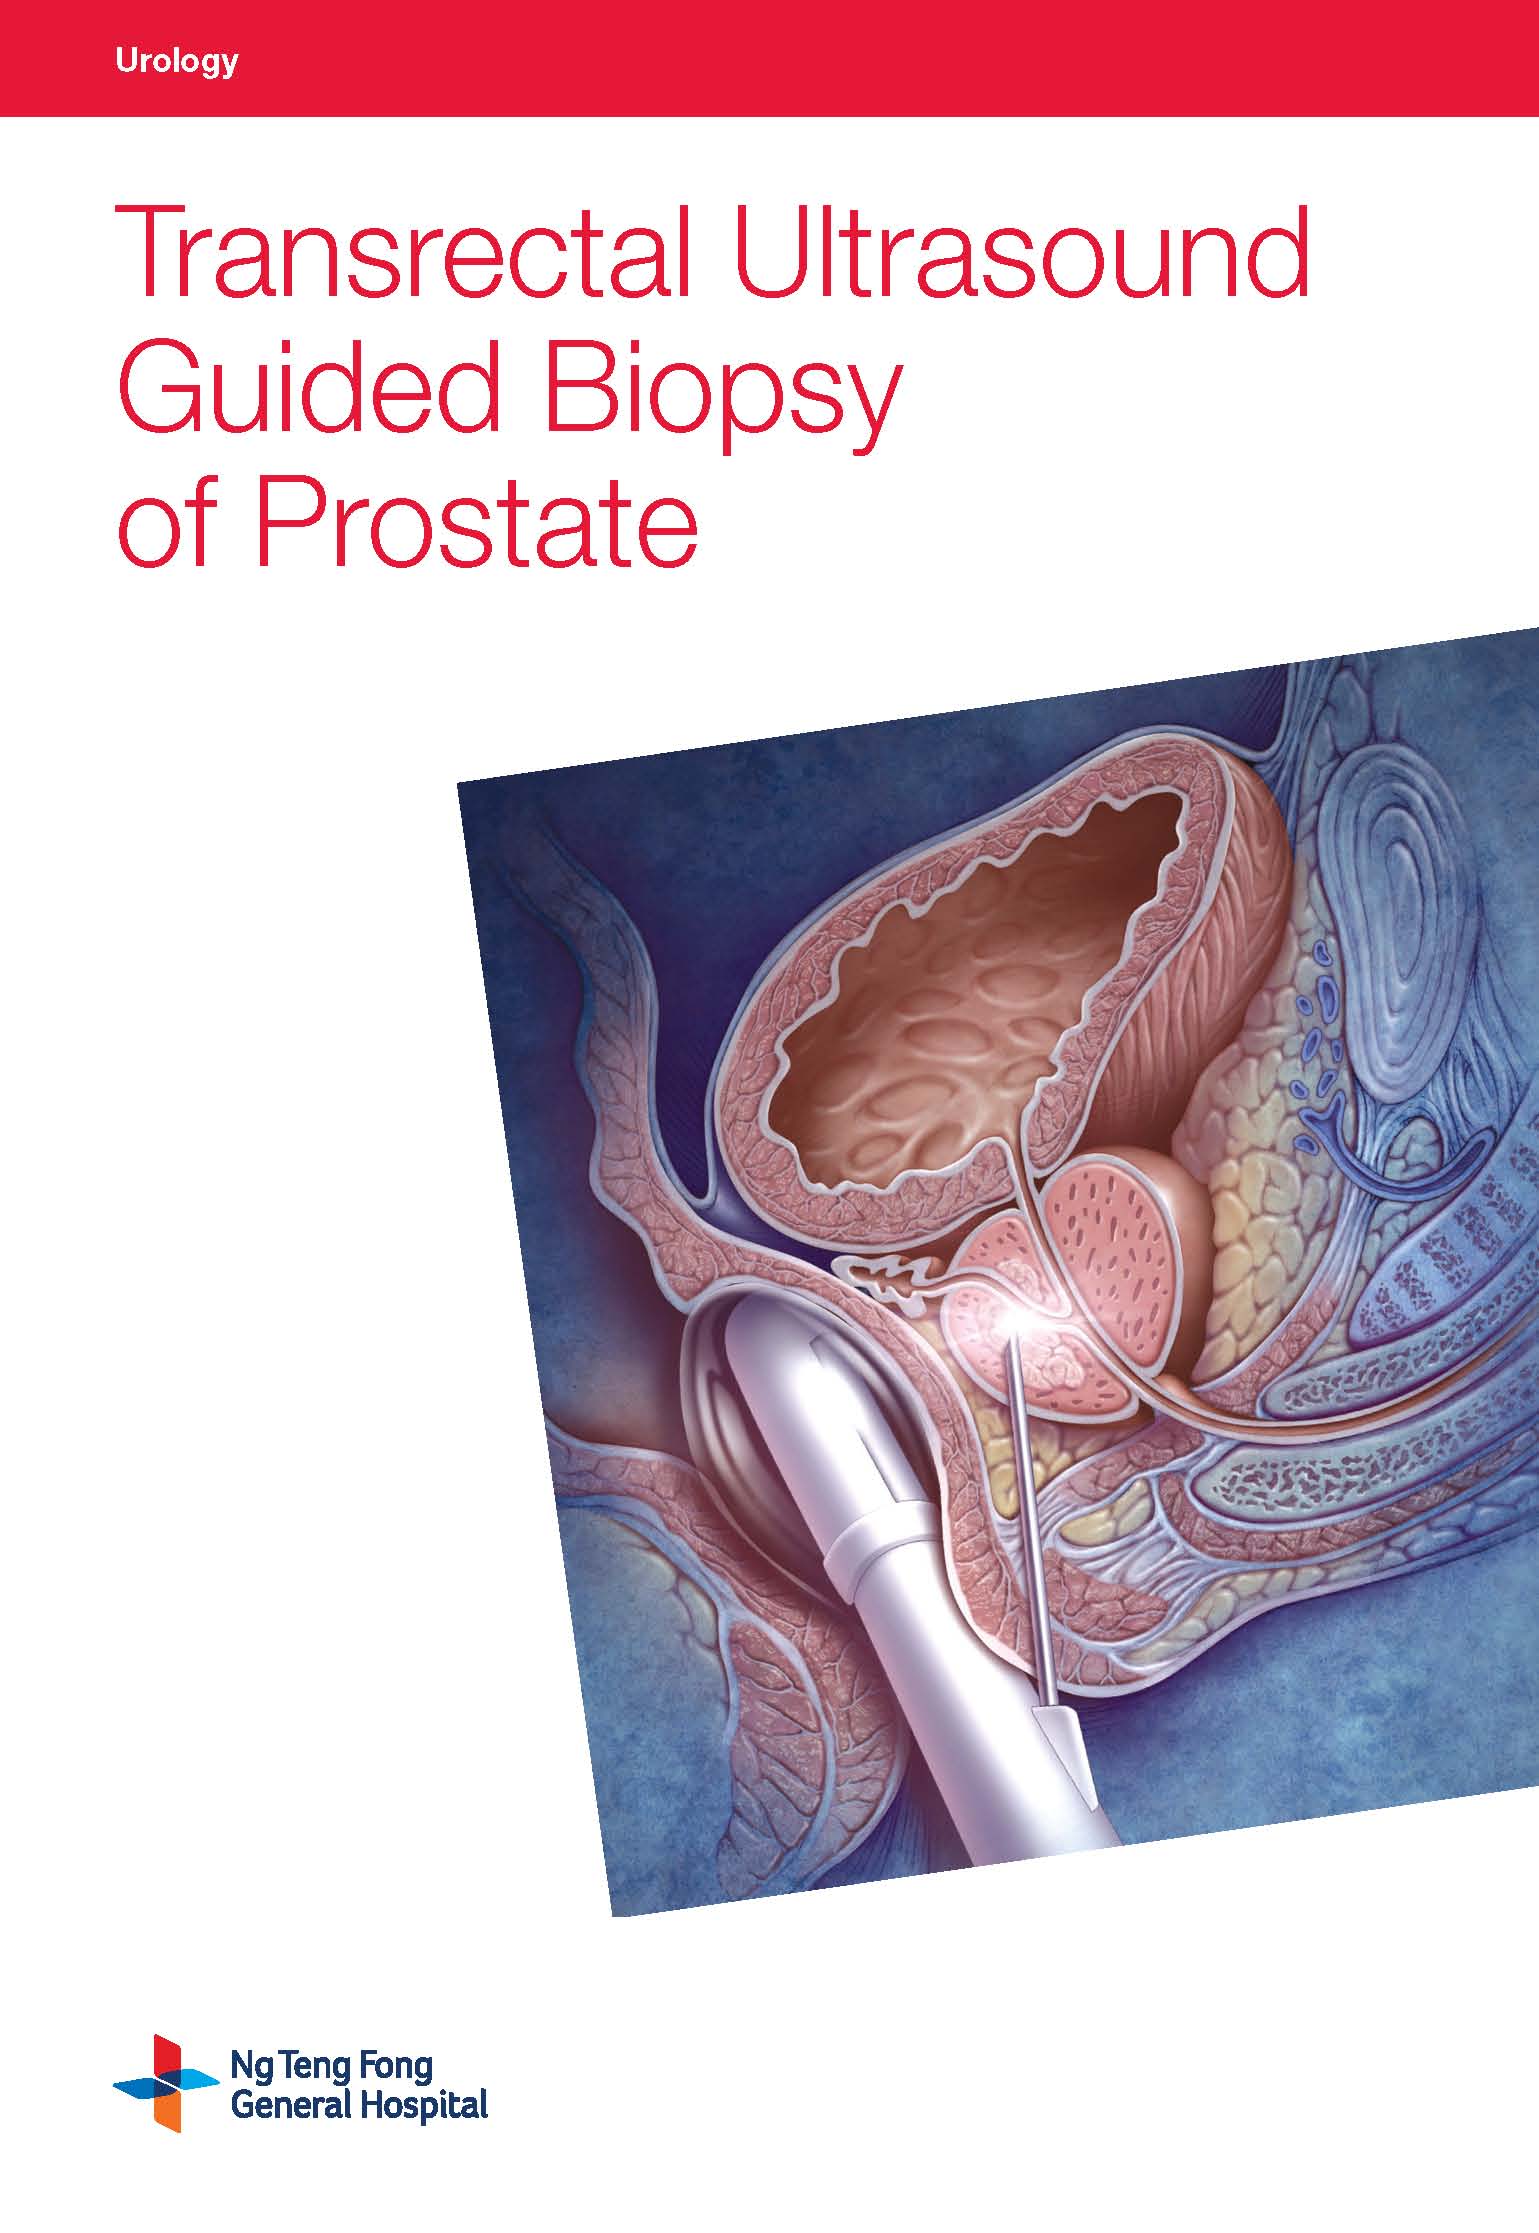 Transrectal Ultrasound Guided Biopsy of Prostate